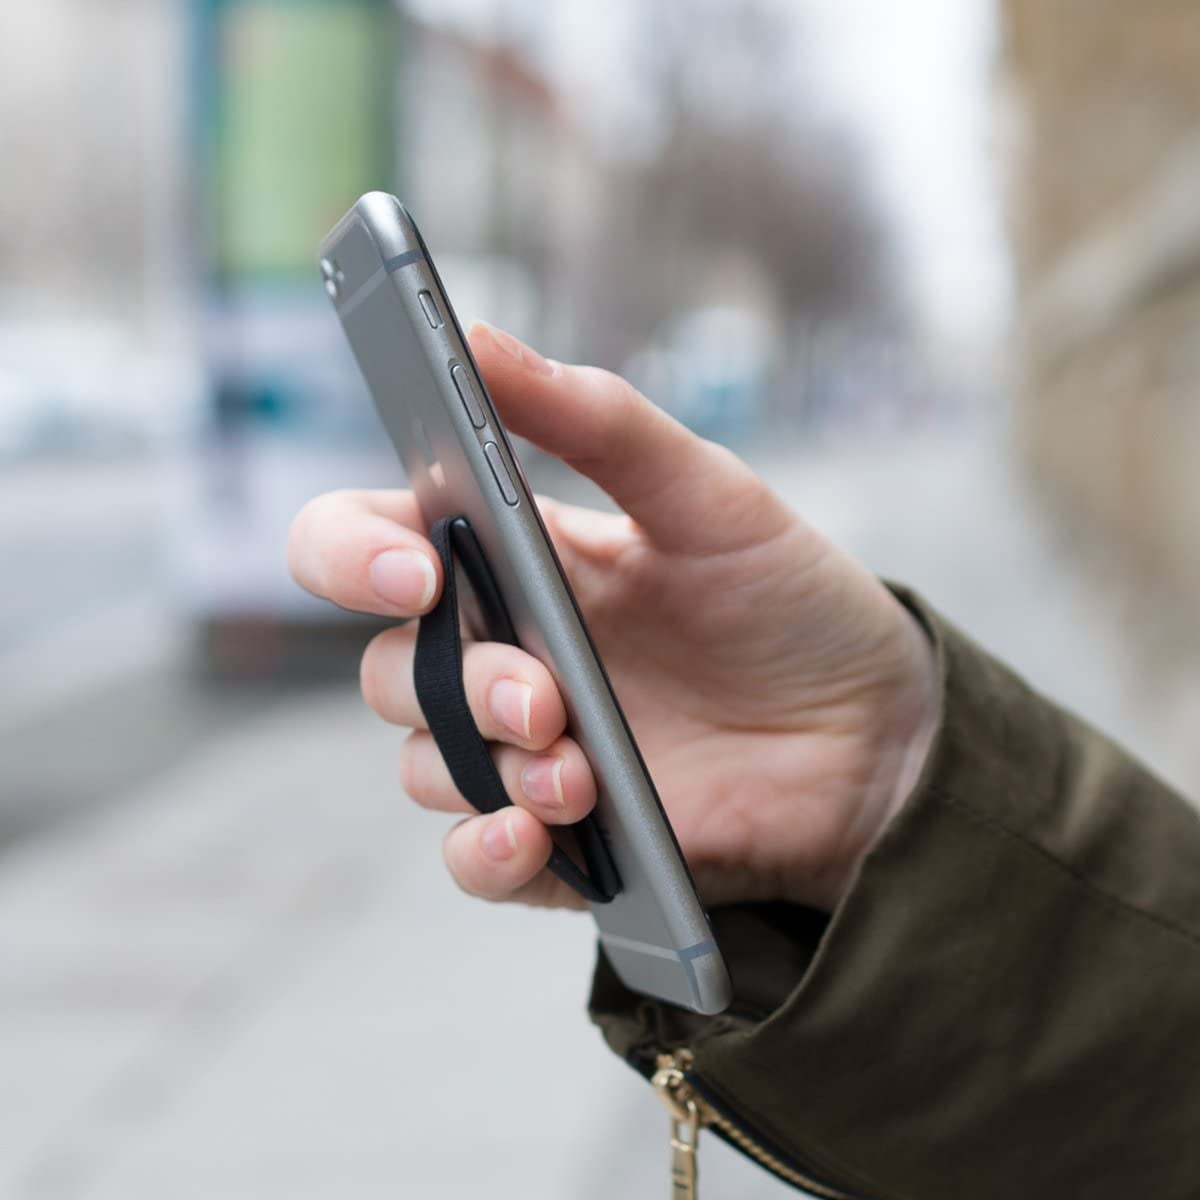 3X Finger Strap Enhanced one-Handed use kwmobile Finger Holder Set of 3 Smartphone Holders Grip for Cell Phone in Black Silver Rose Gold